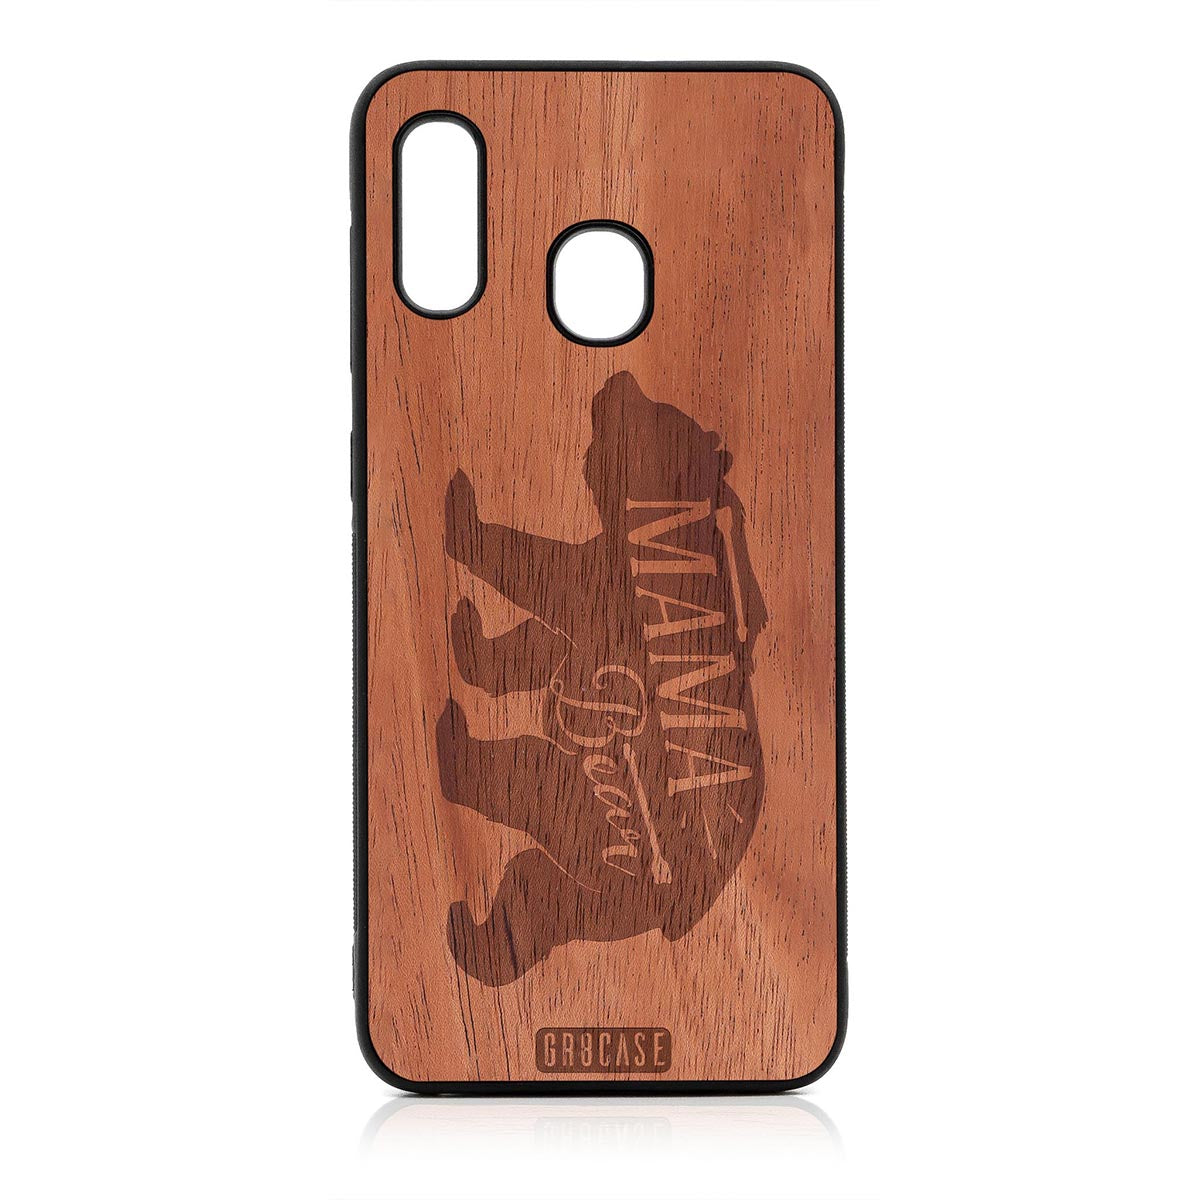 Mama Bear Design Wood Case For Samsung Galaxy A20 by GR8CASE